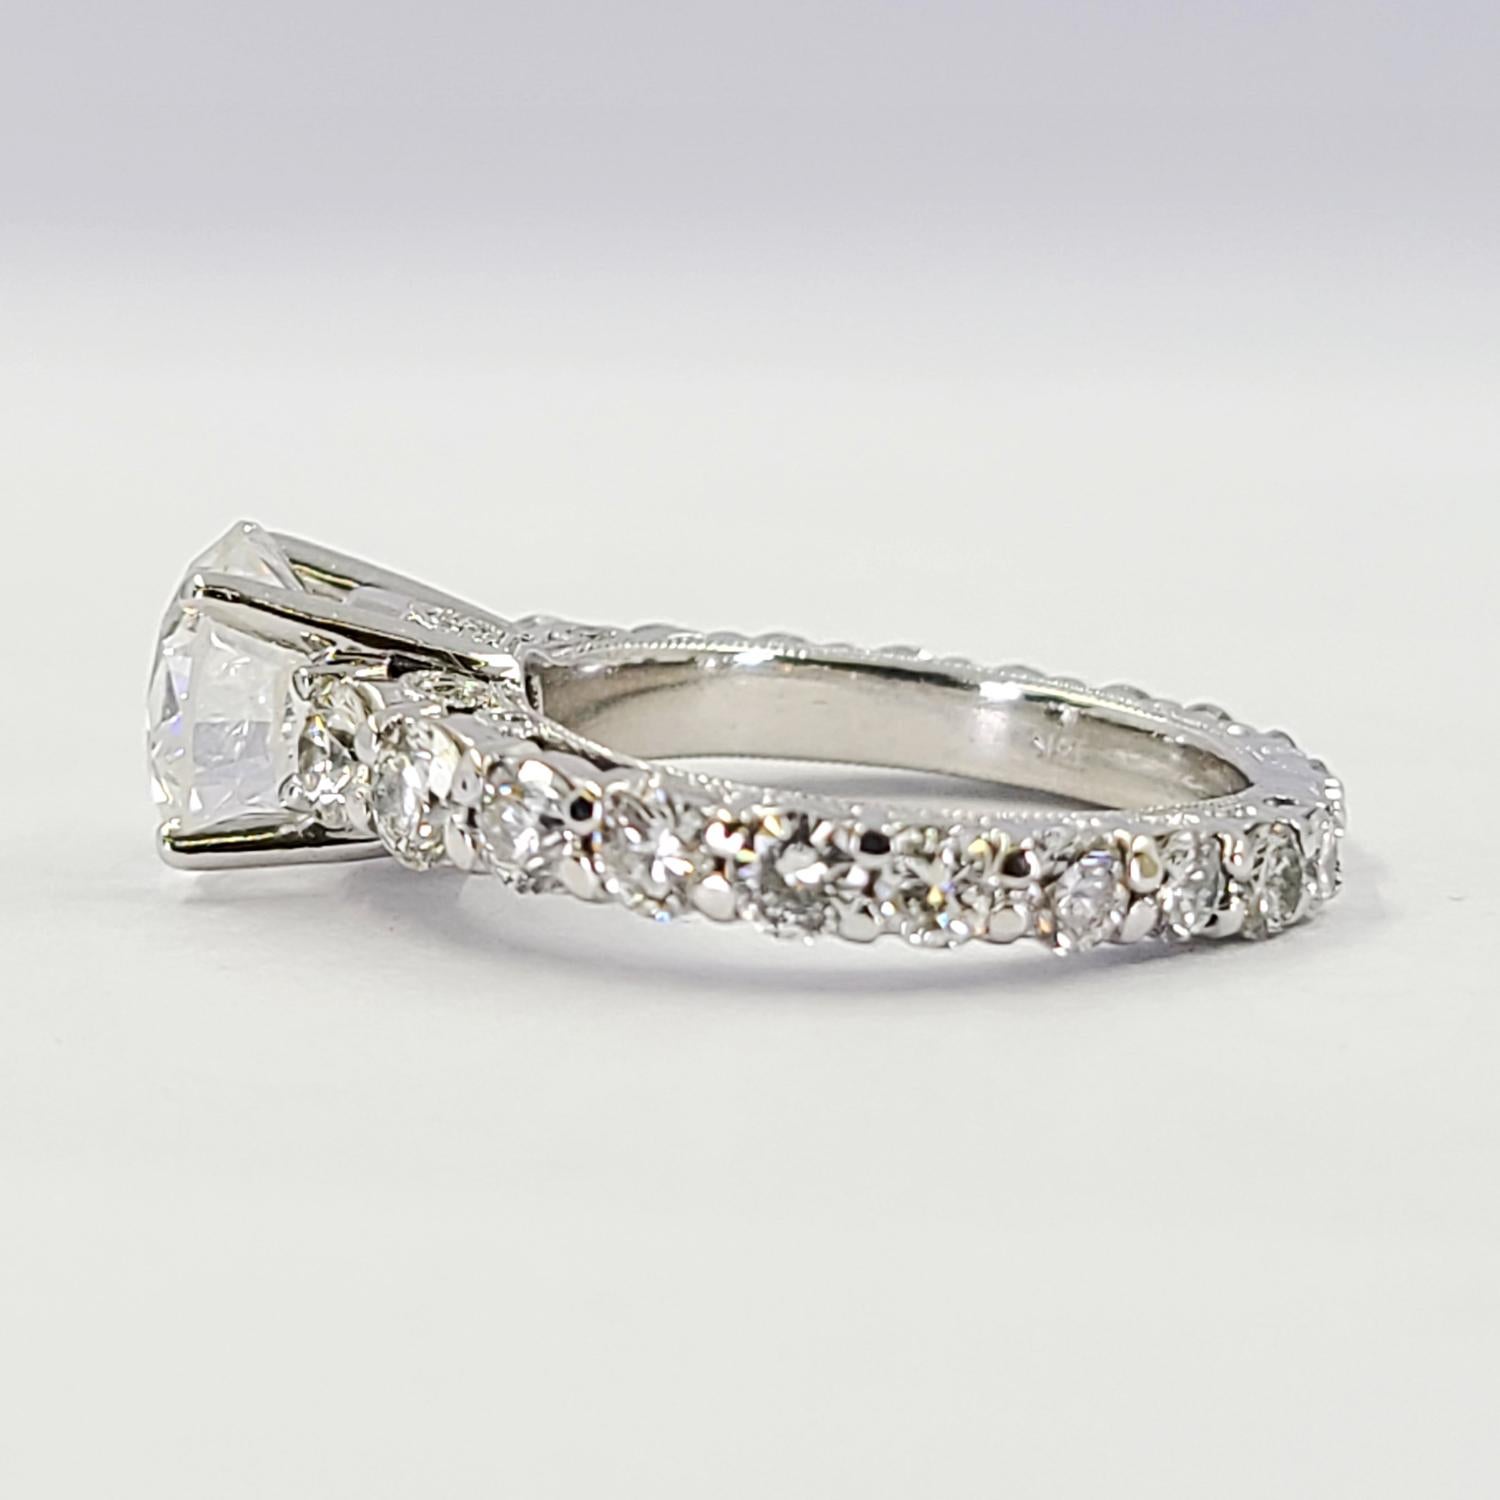 Round Cut GIA Report Certified 2.01 Carat Round Diamond Engagement Ring